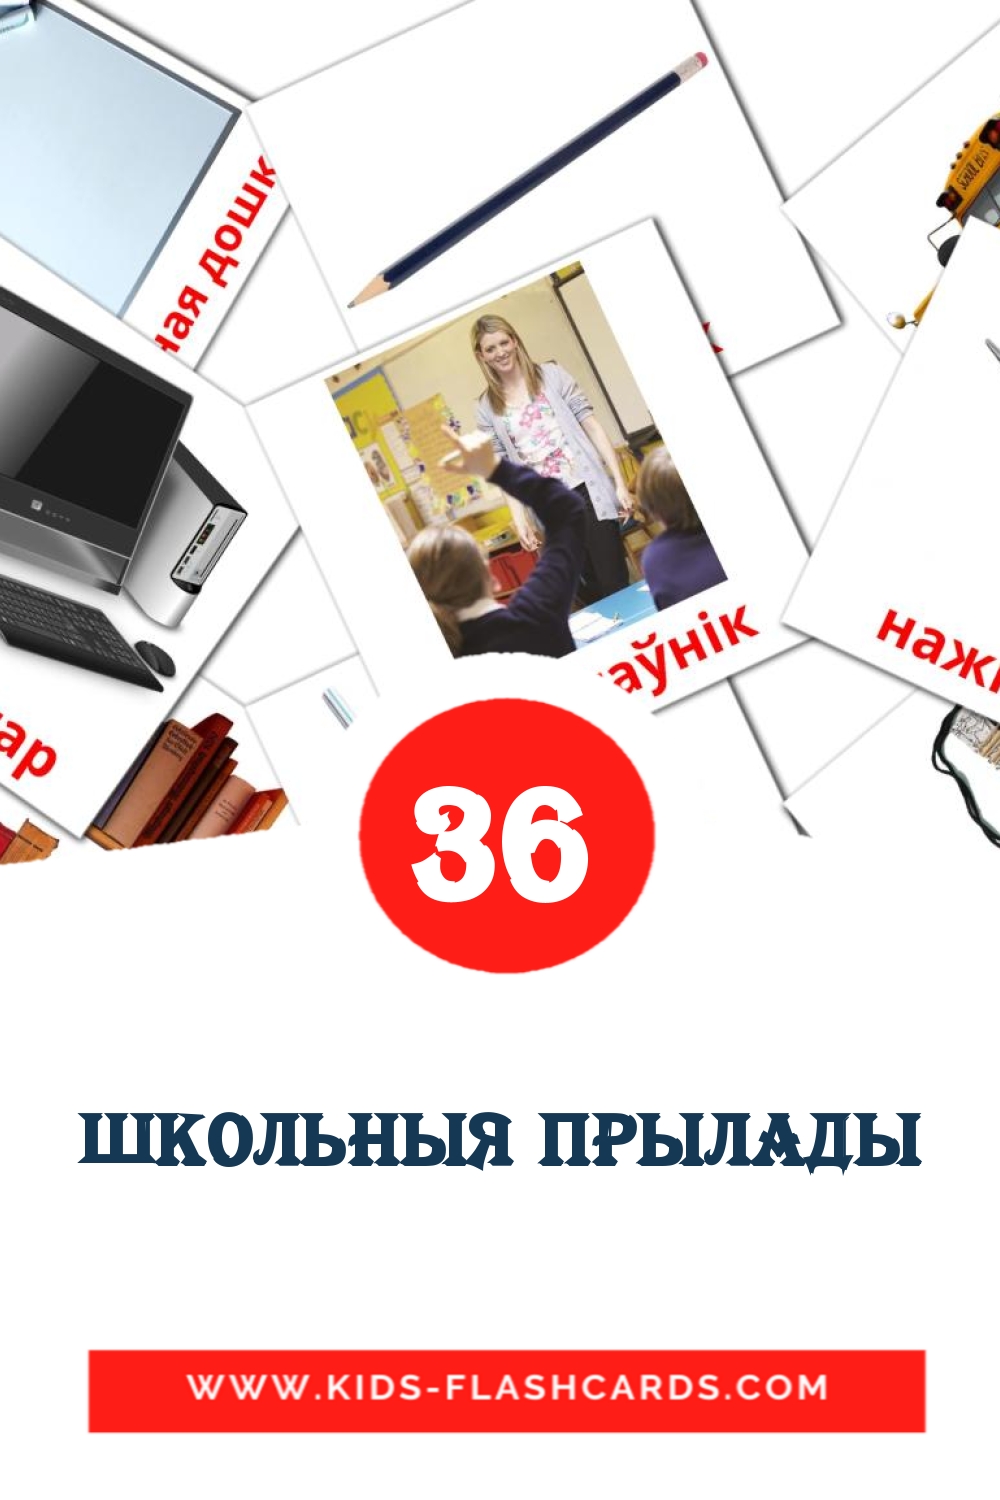 36 carte illustrate di школьныя прылады per la scuola materna in bielorusso